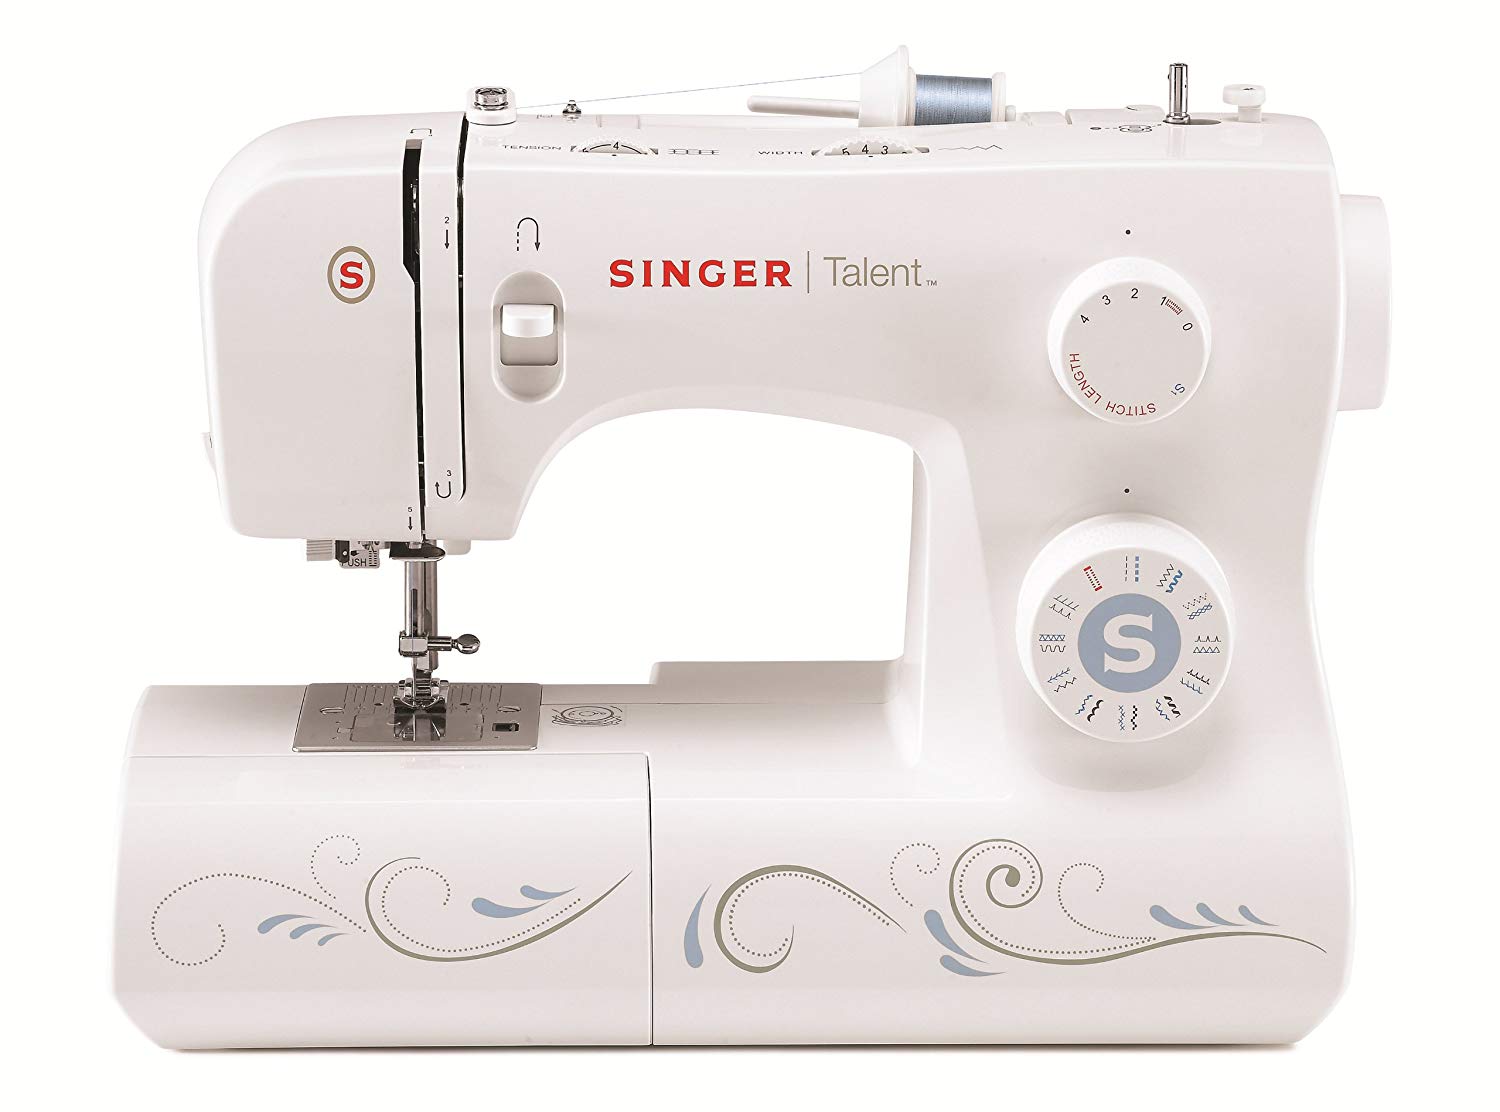 Singer Talent Beginner Sewing Machines